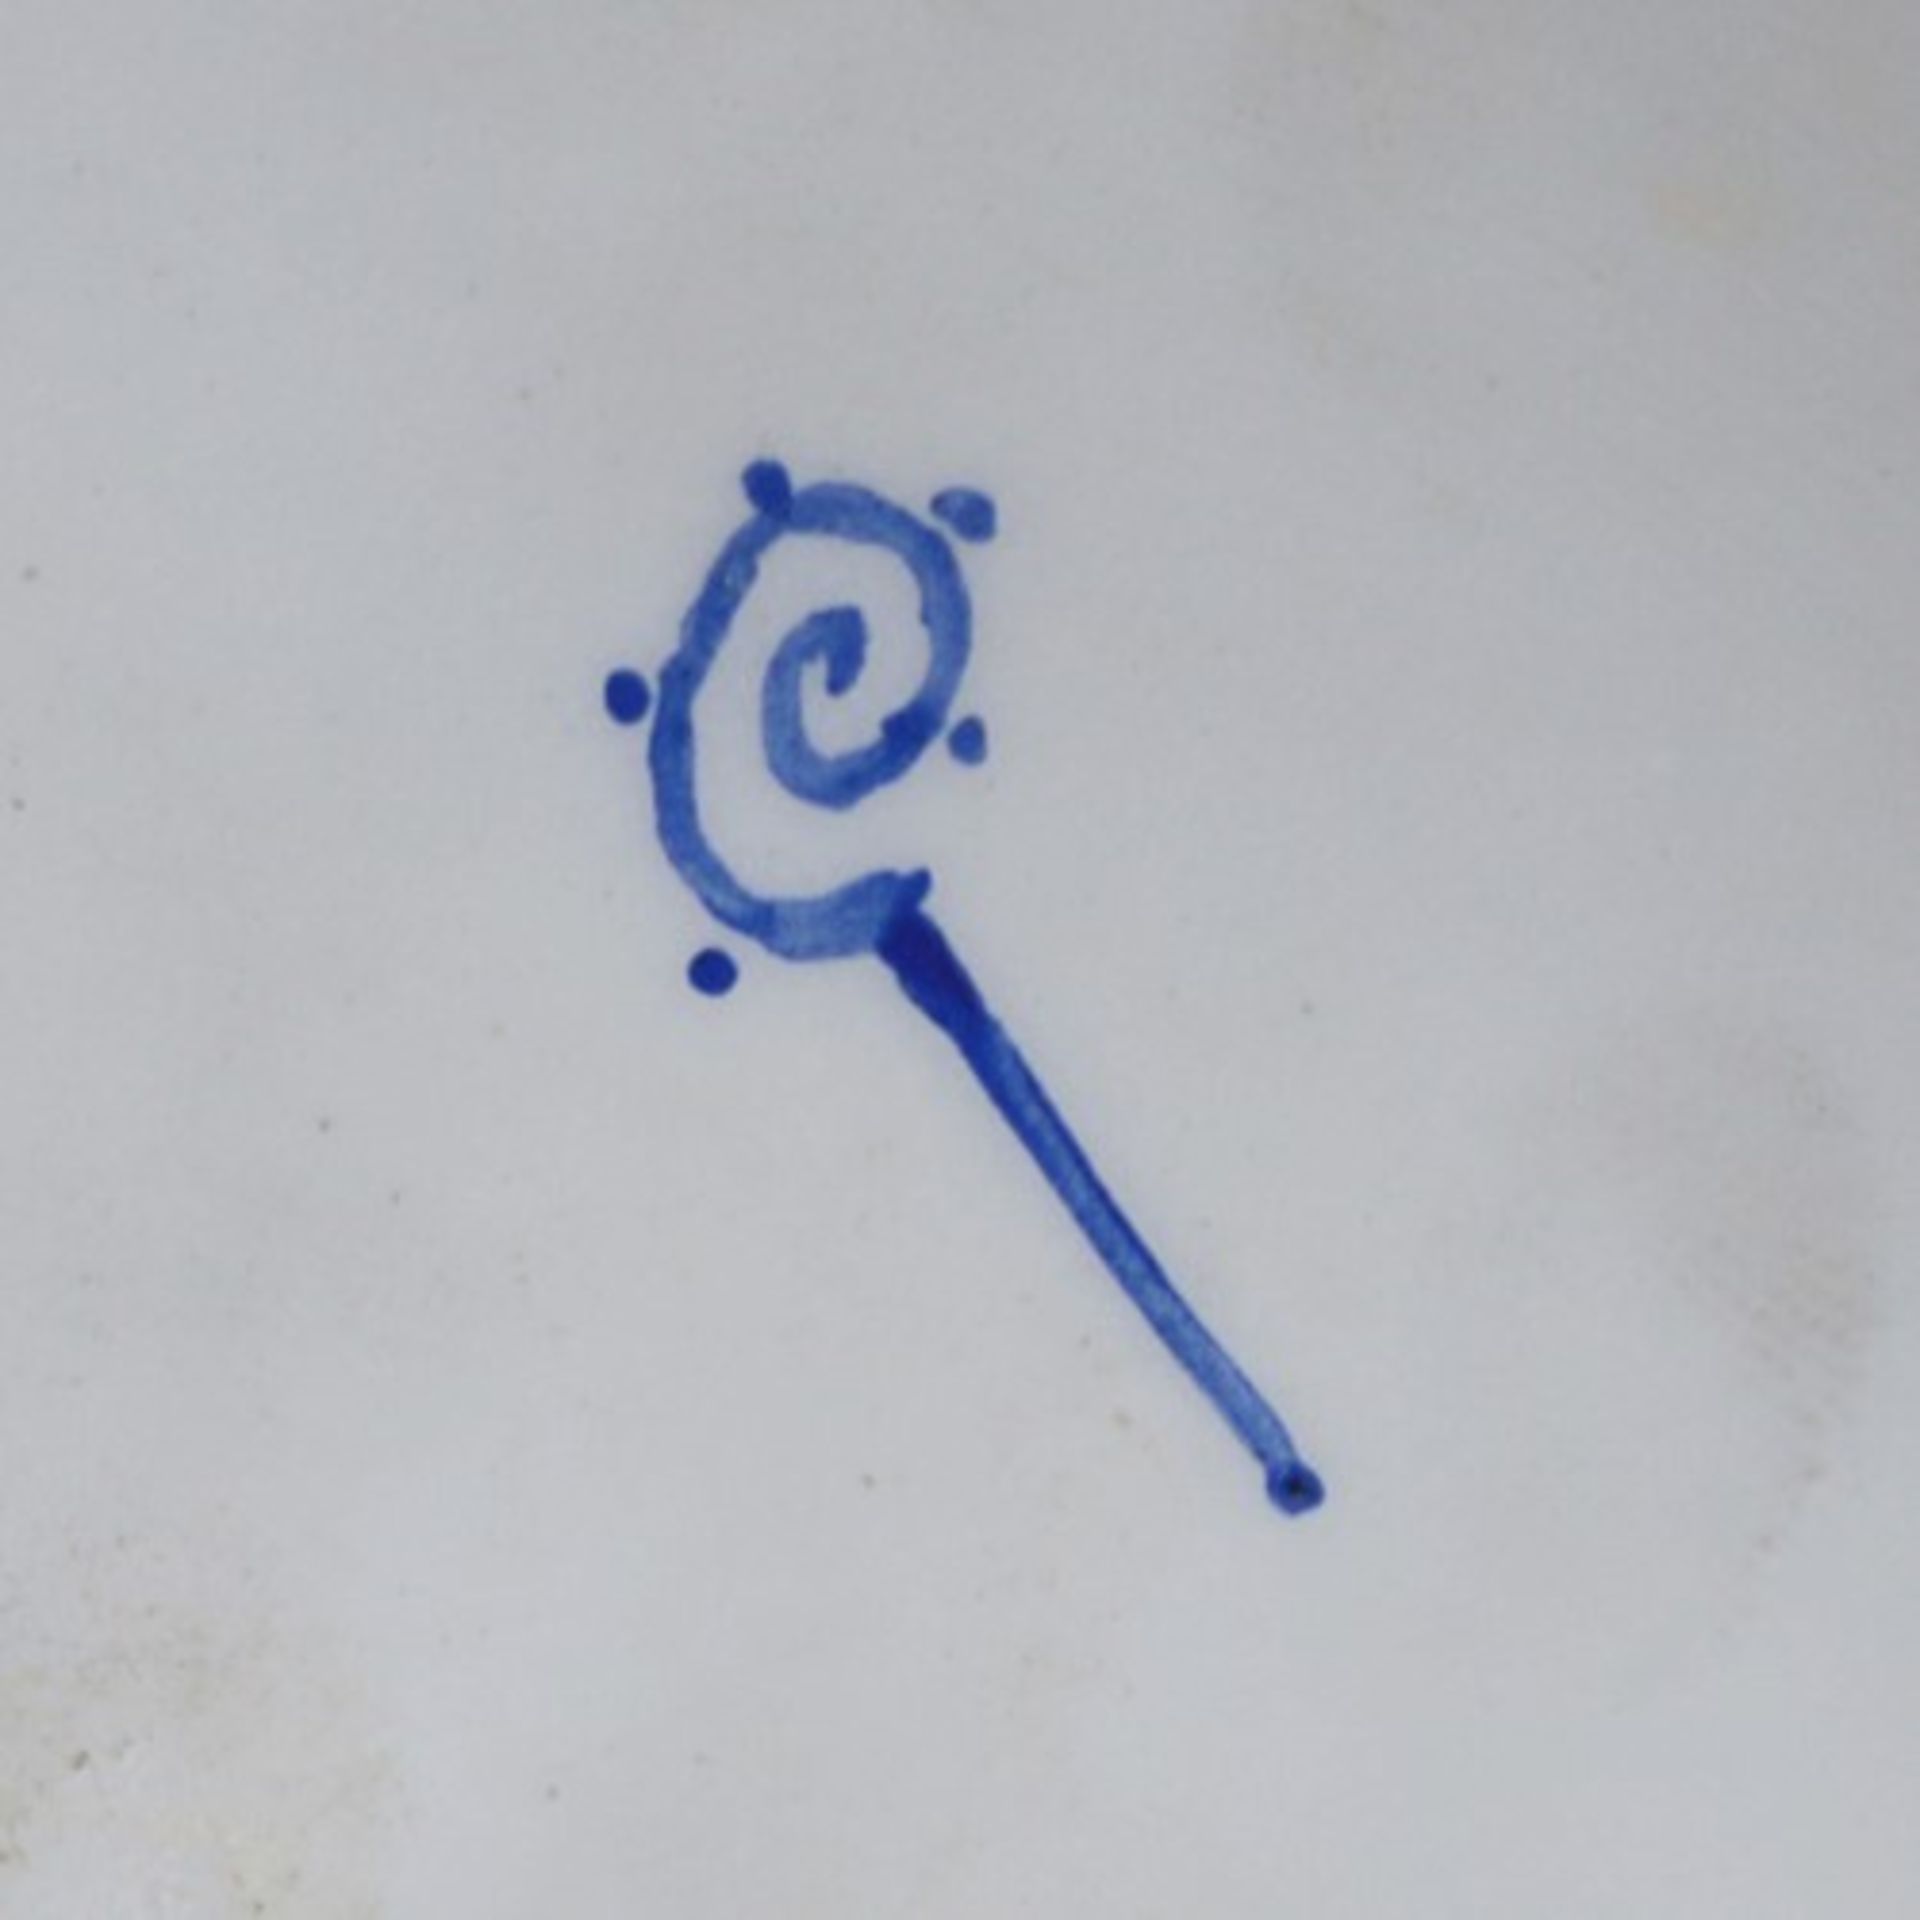 Dressel, Kister & Cie. - Figur1907-20, blaue Marke, Modellnr. 4429, ovale Plinthe, amouröse Szene, - Bild 5 aus 14